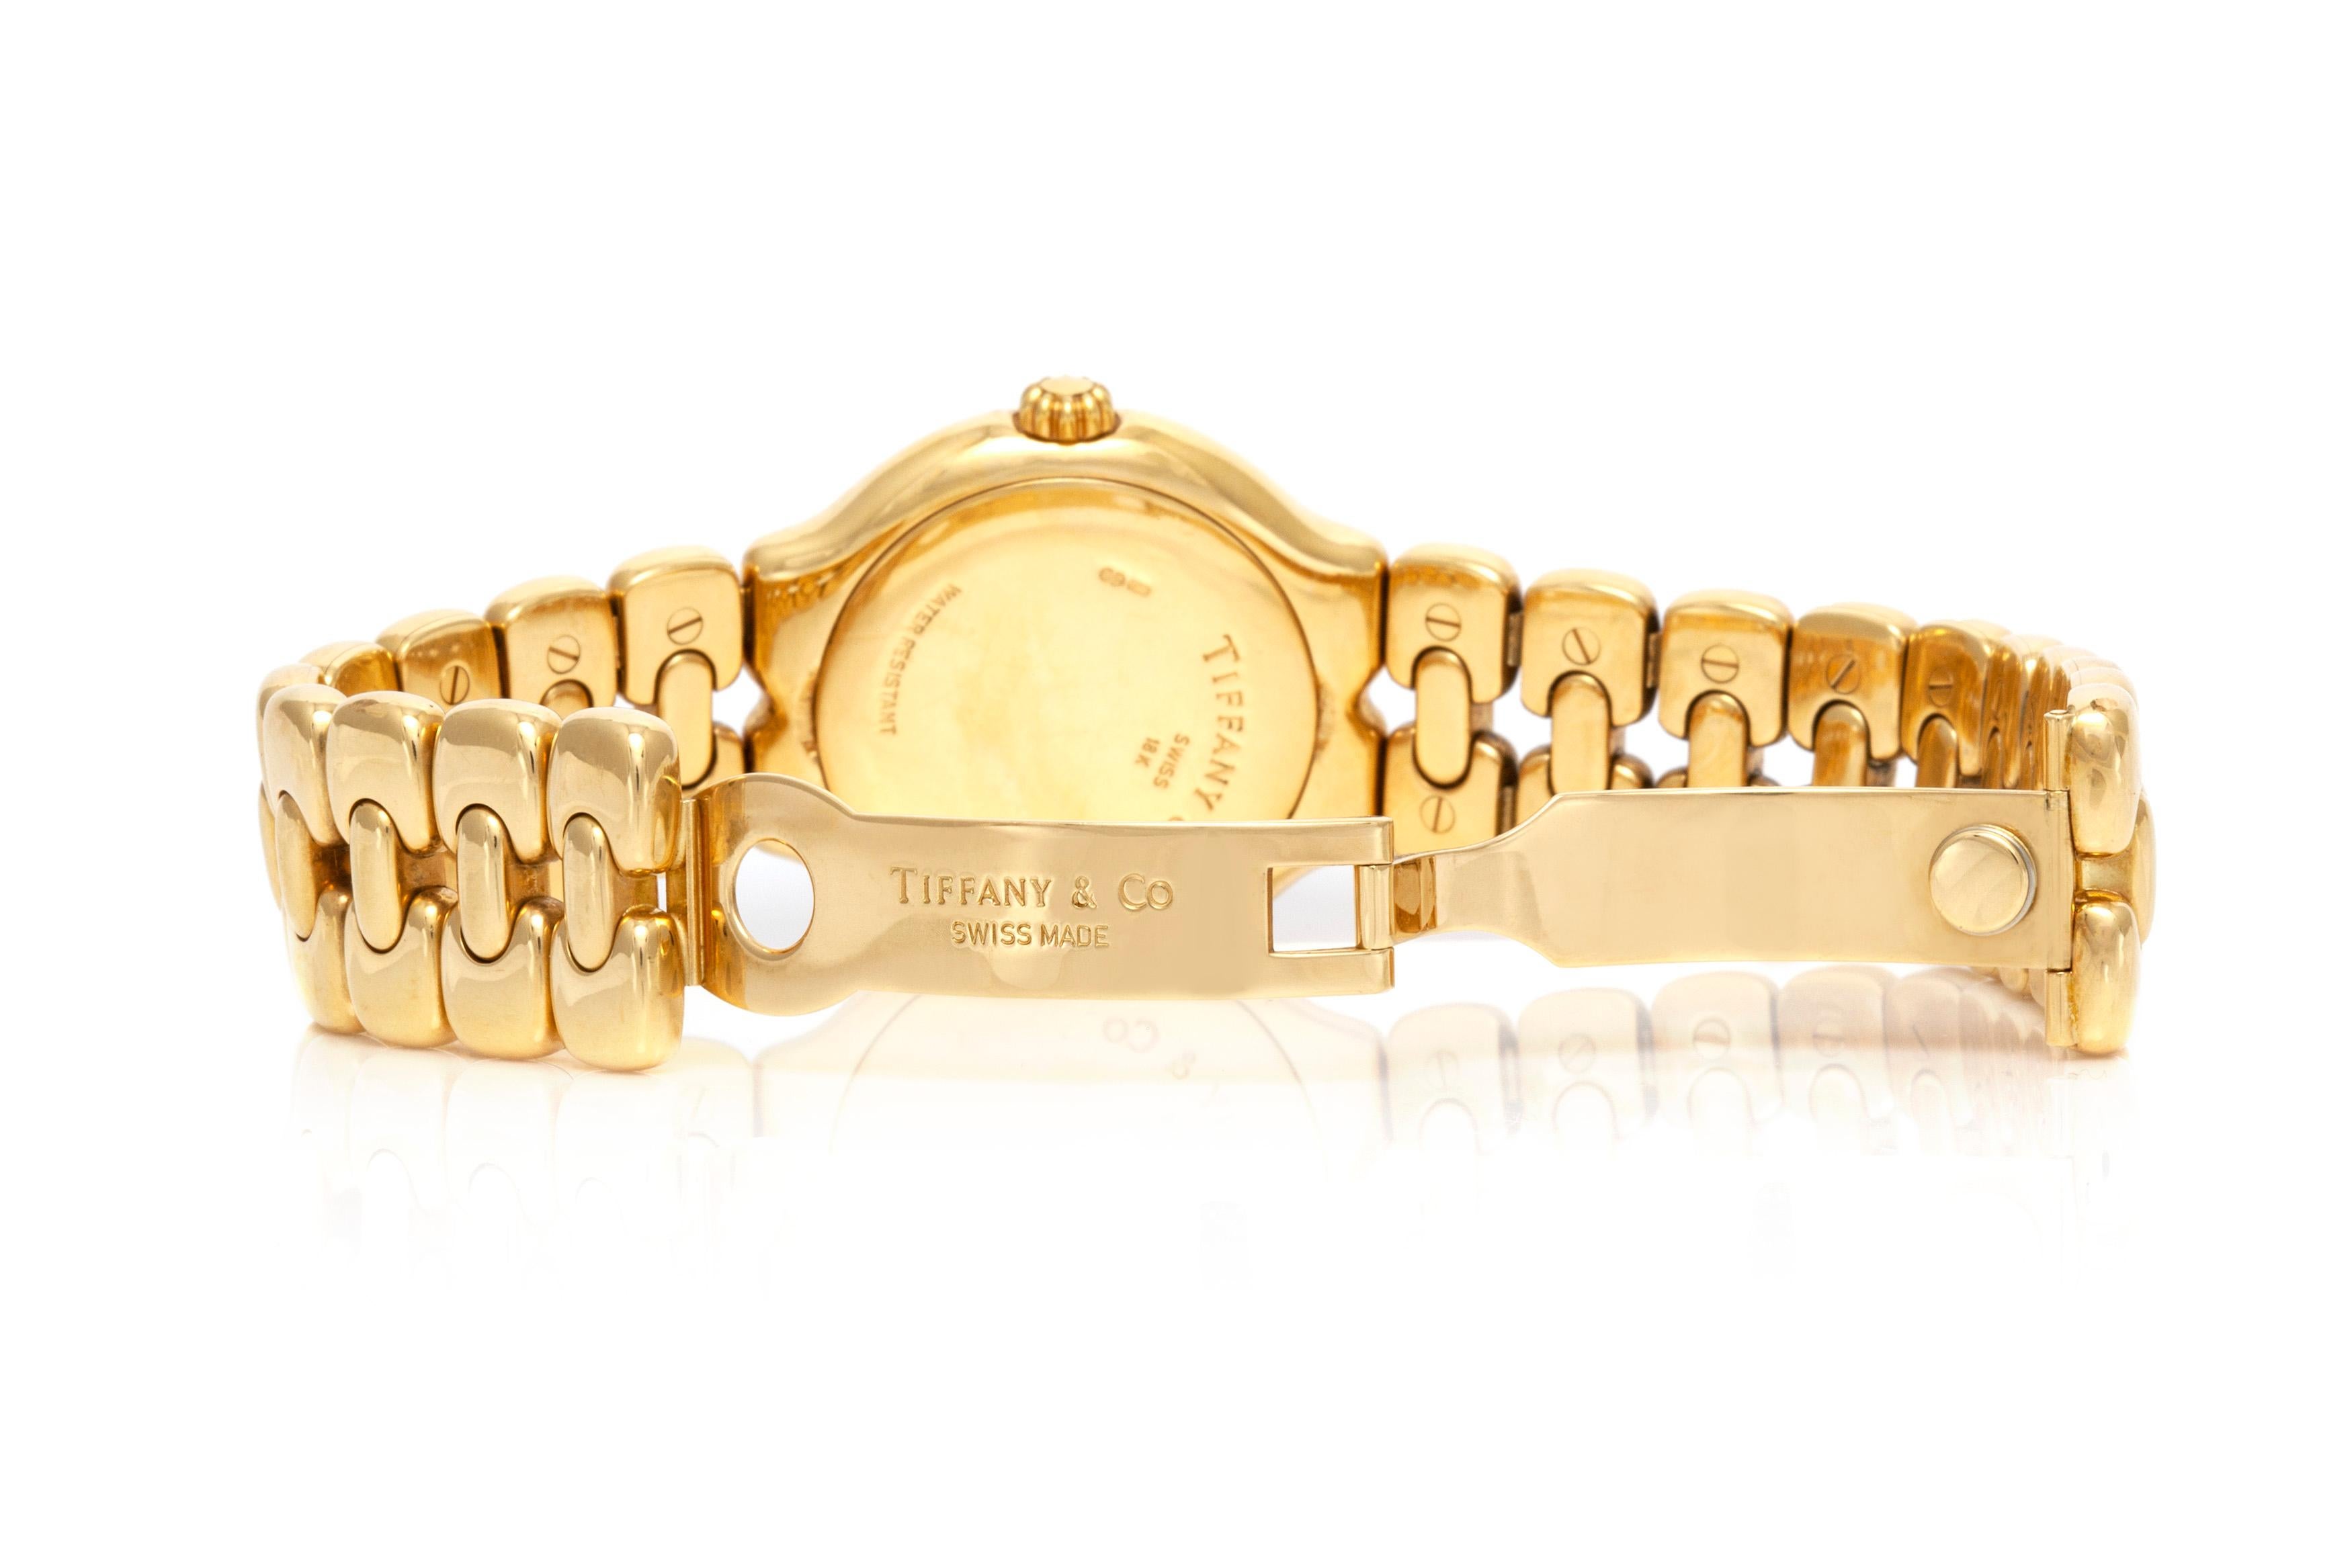 tiffany & co 18k gold watch